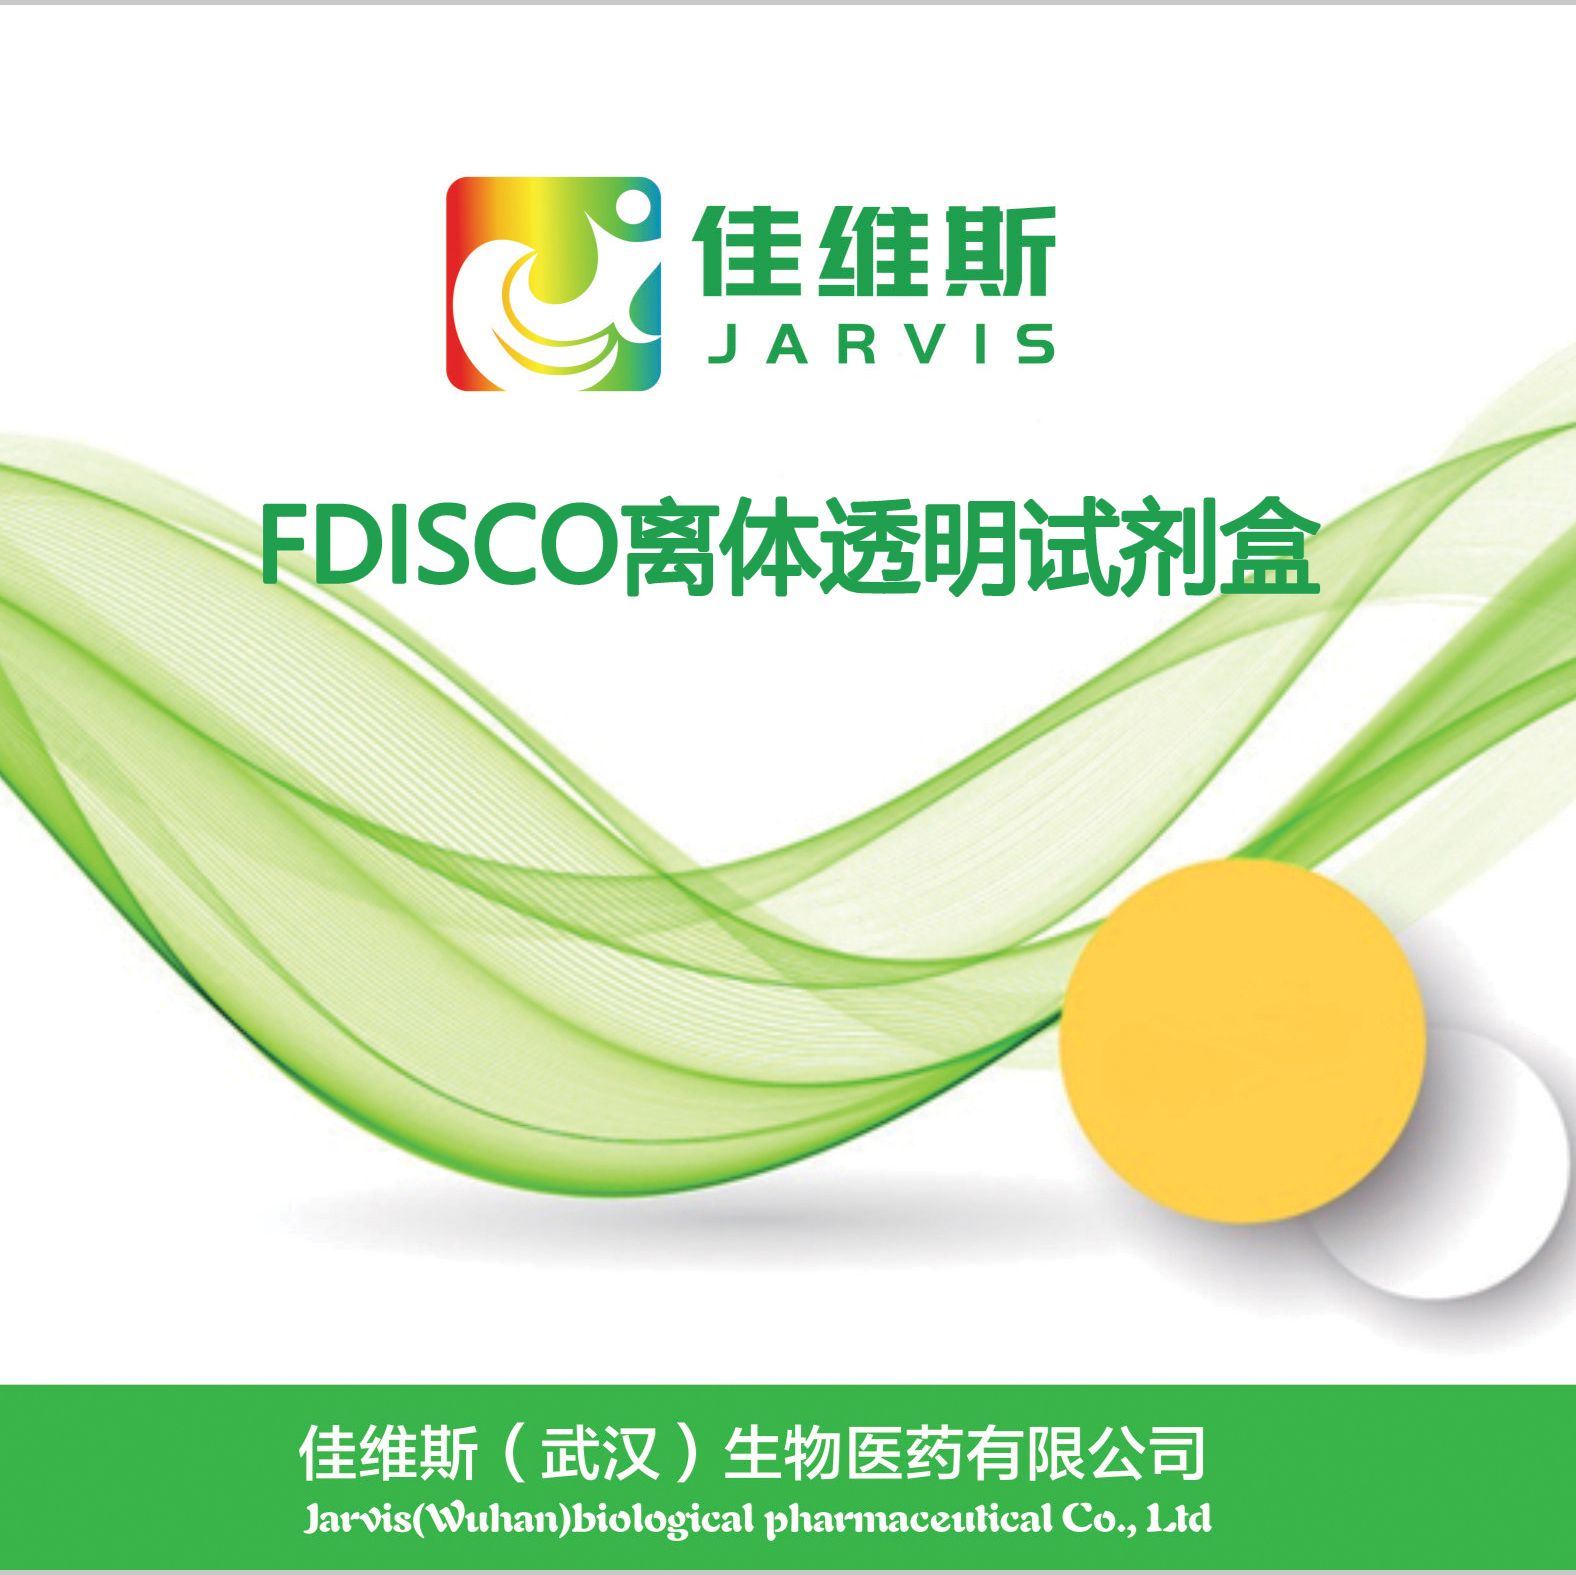 FDISCO离体透明试剂盒 离体组织透明化试剂